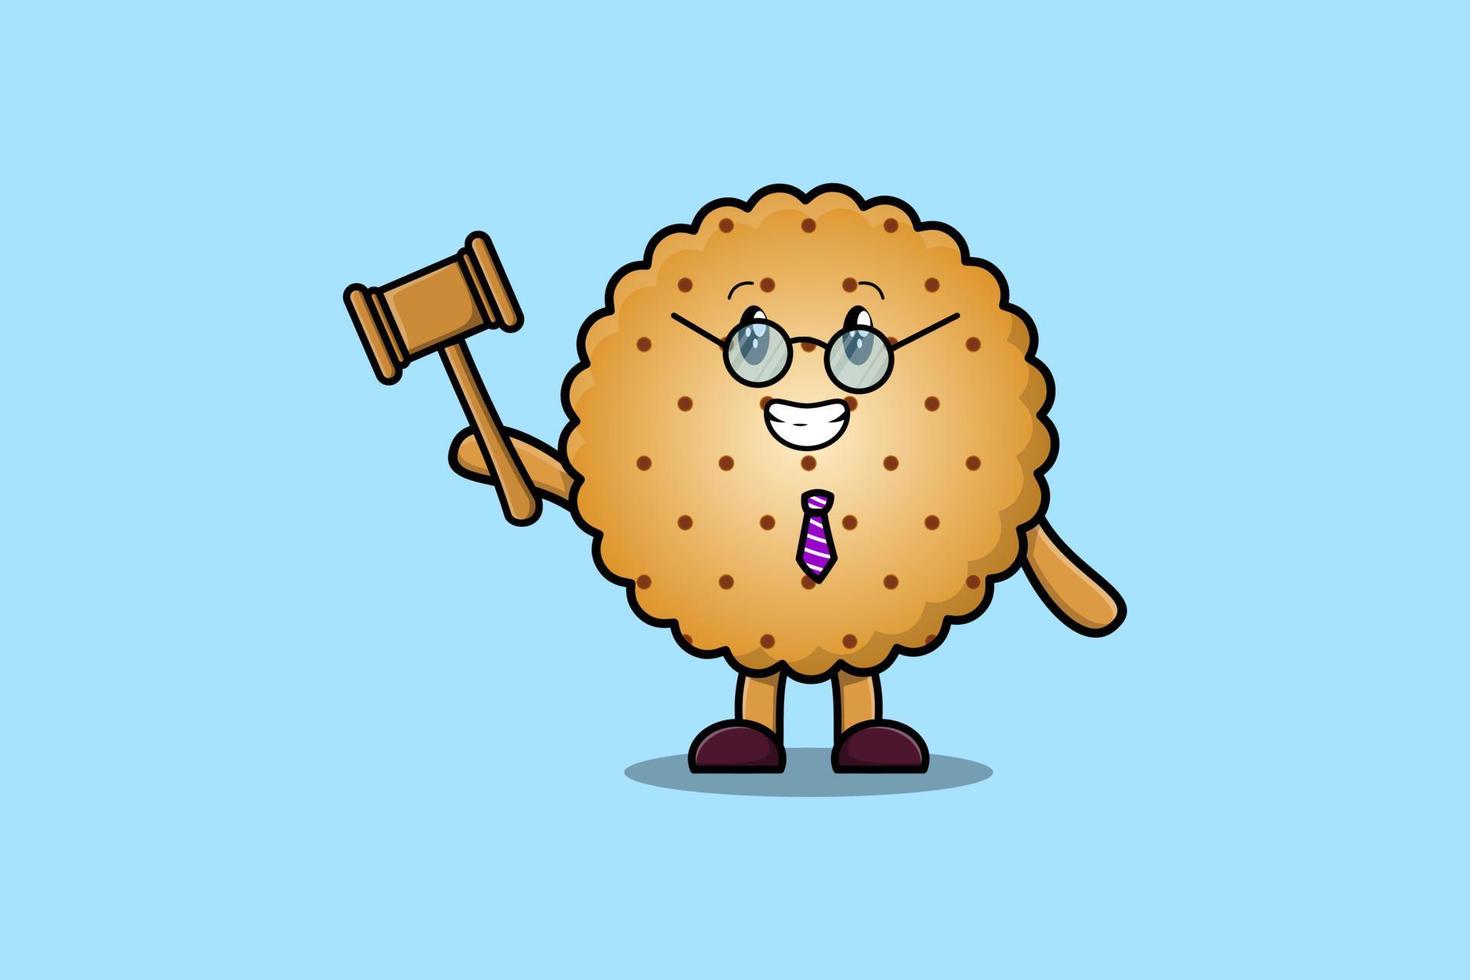 Cute dibujos animados mascota personaje sabio juez cookies vector